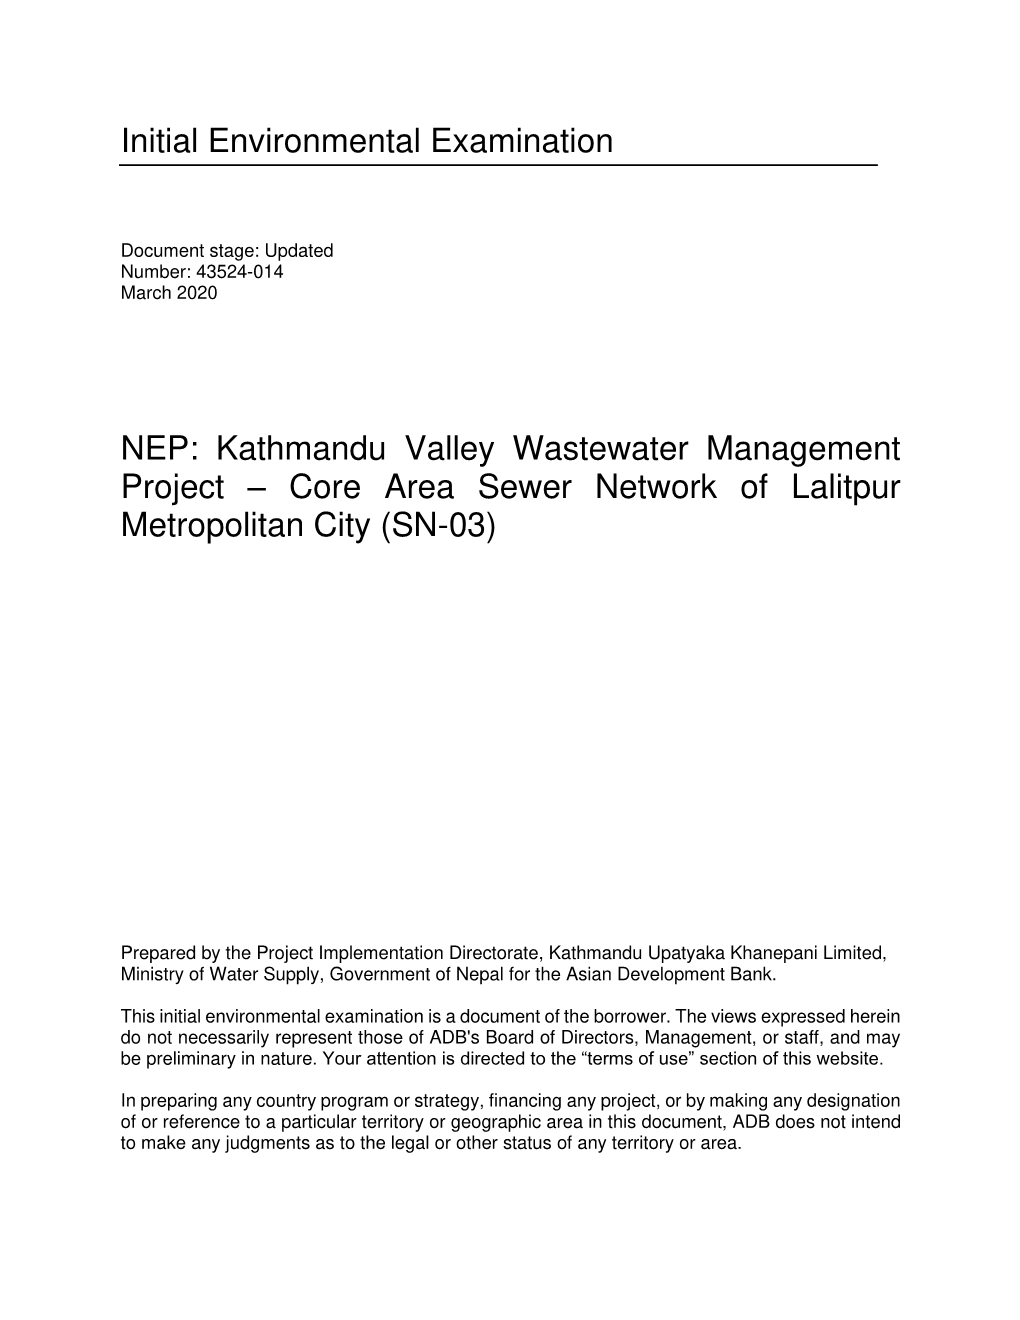 43524-014: Kathmandu Valley Wastewater Management Project